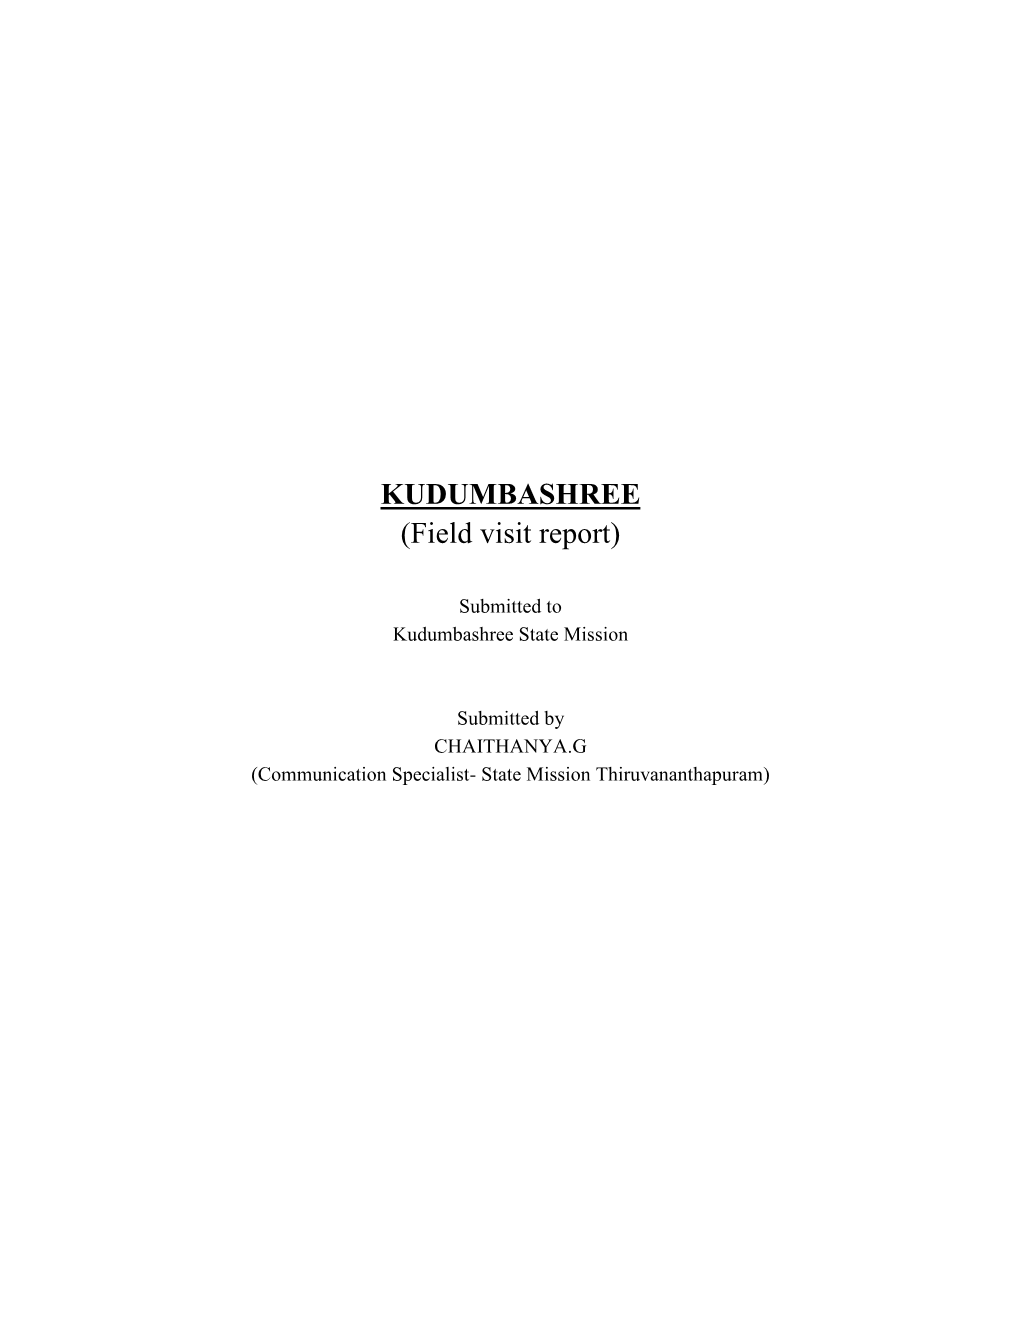 KUDUMBASHREE (Field Visit Report)